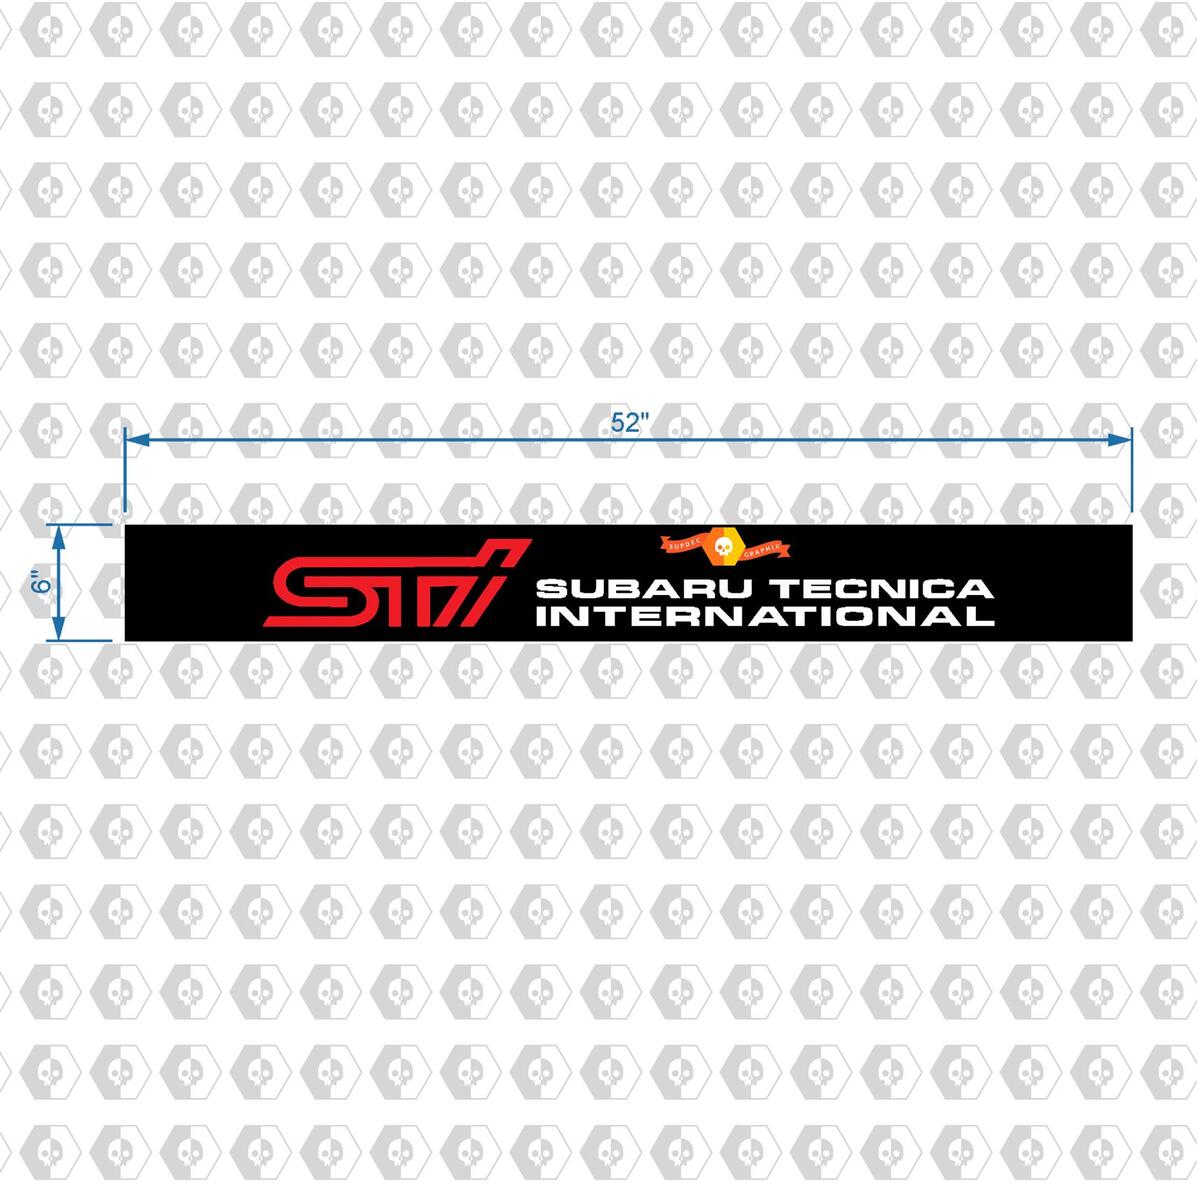 STI Subaru Tecnica International Windschutzscheibe Banner Aufkleber Aufkleber